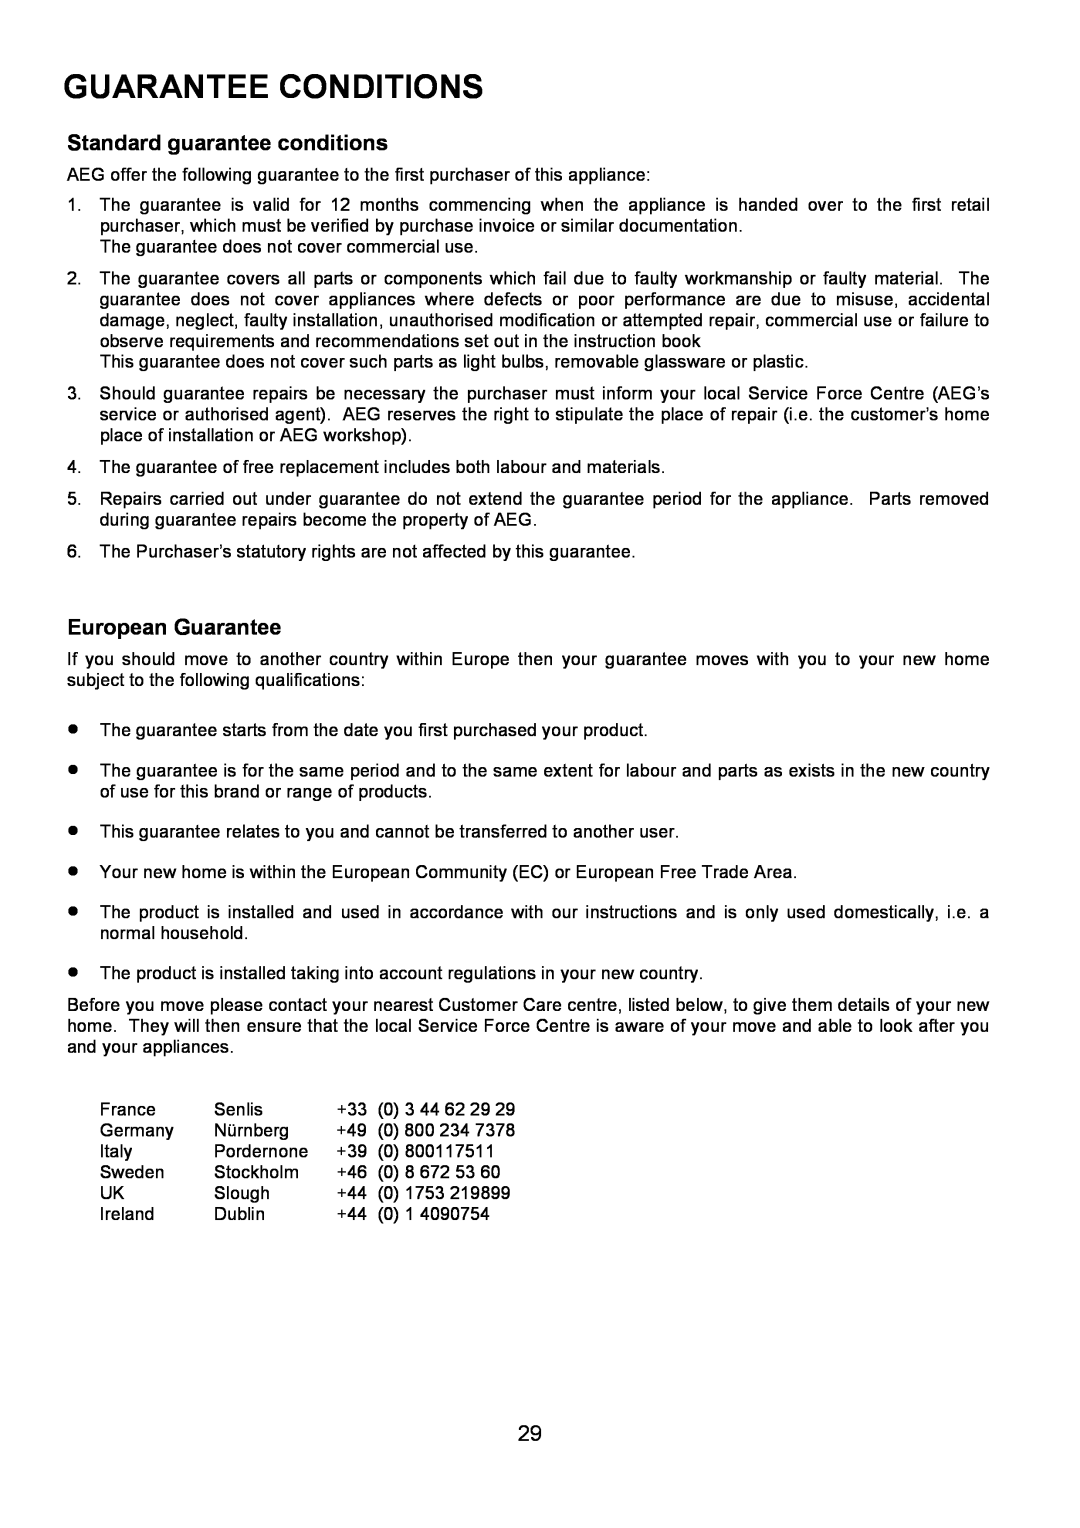 Electrolux U3100-4 manual Guarantee Conditions, Standard guarantee conditions, European Guarantee 